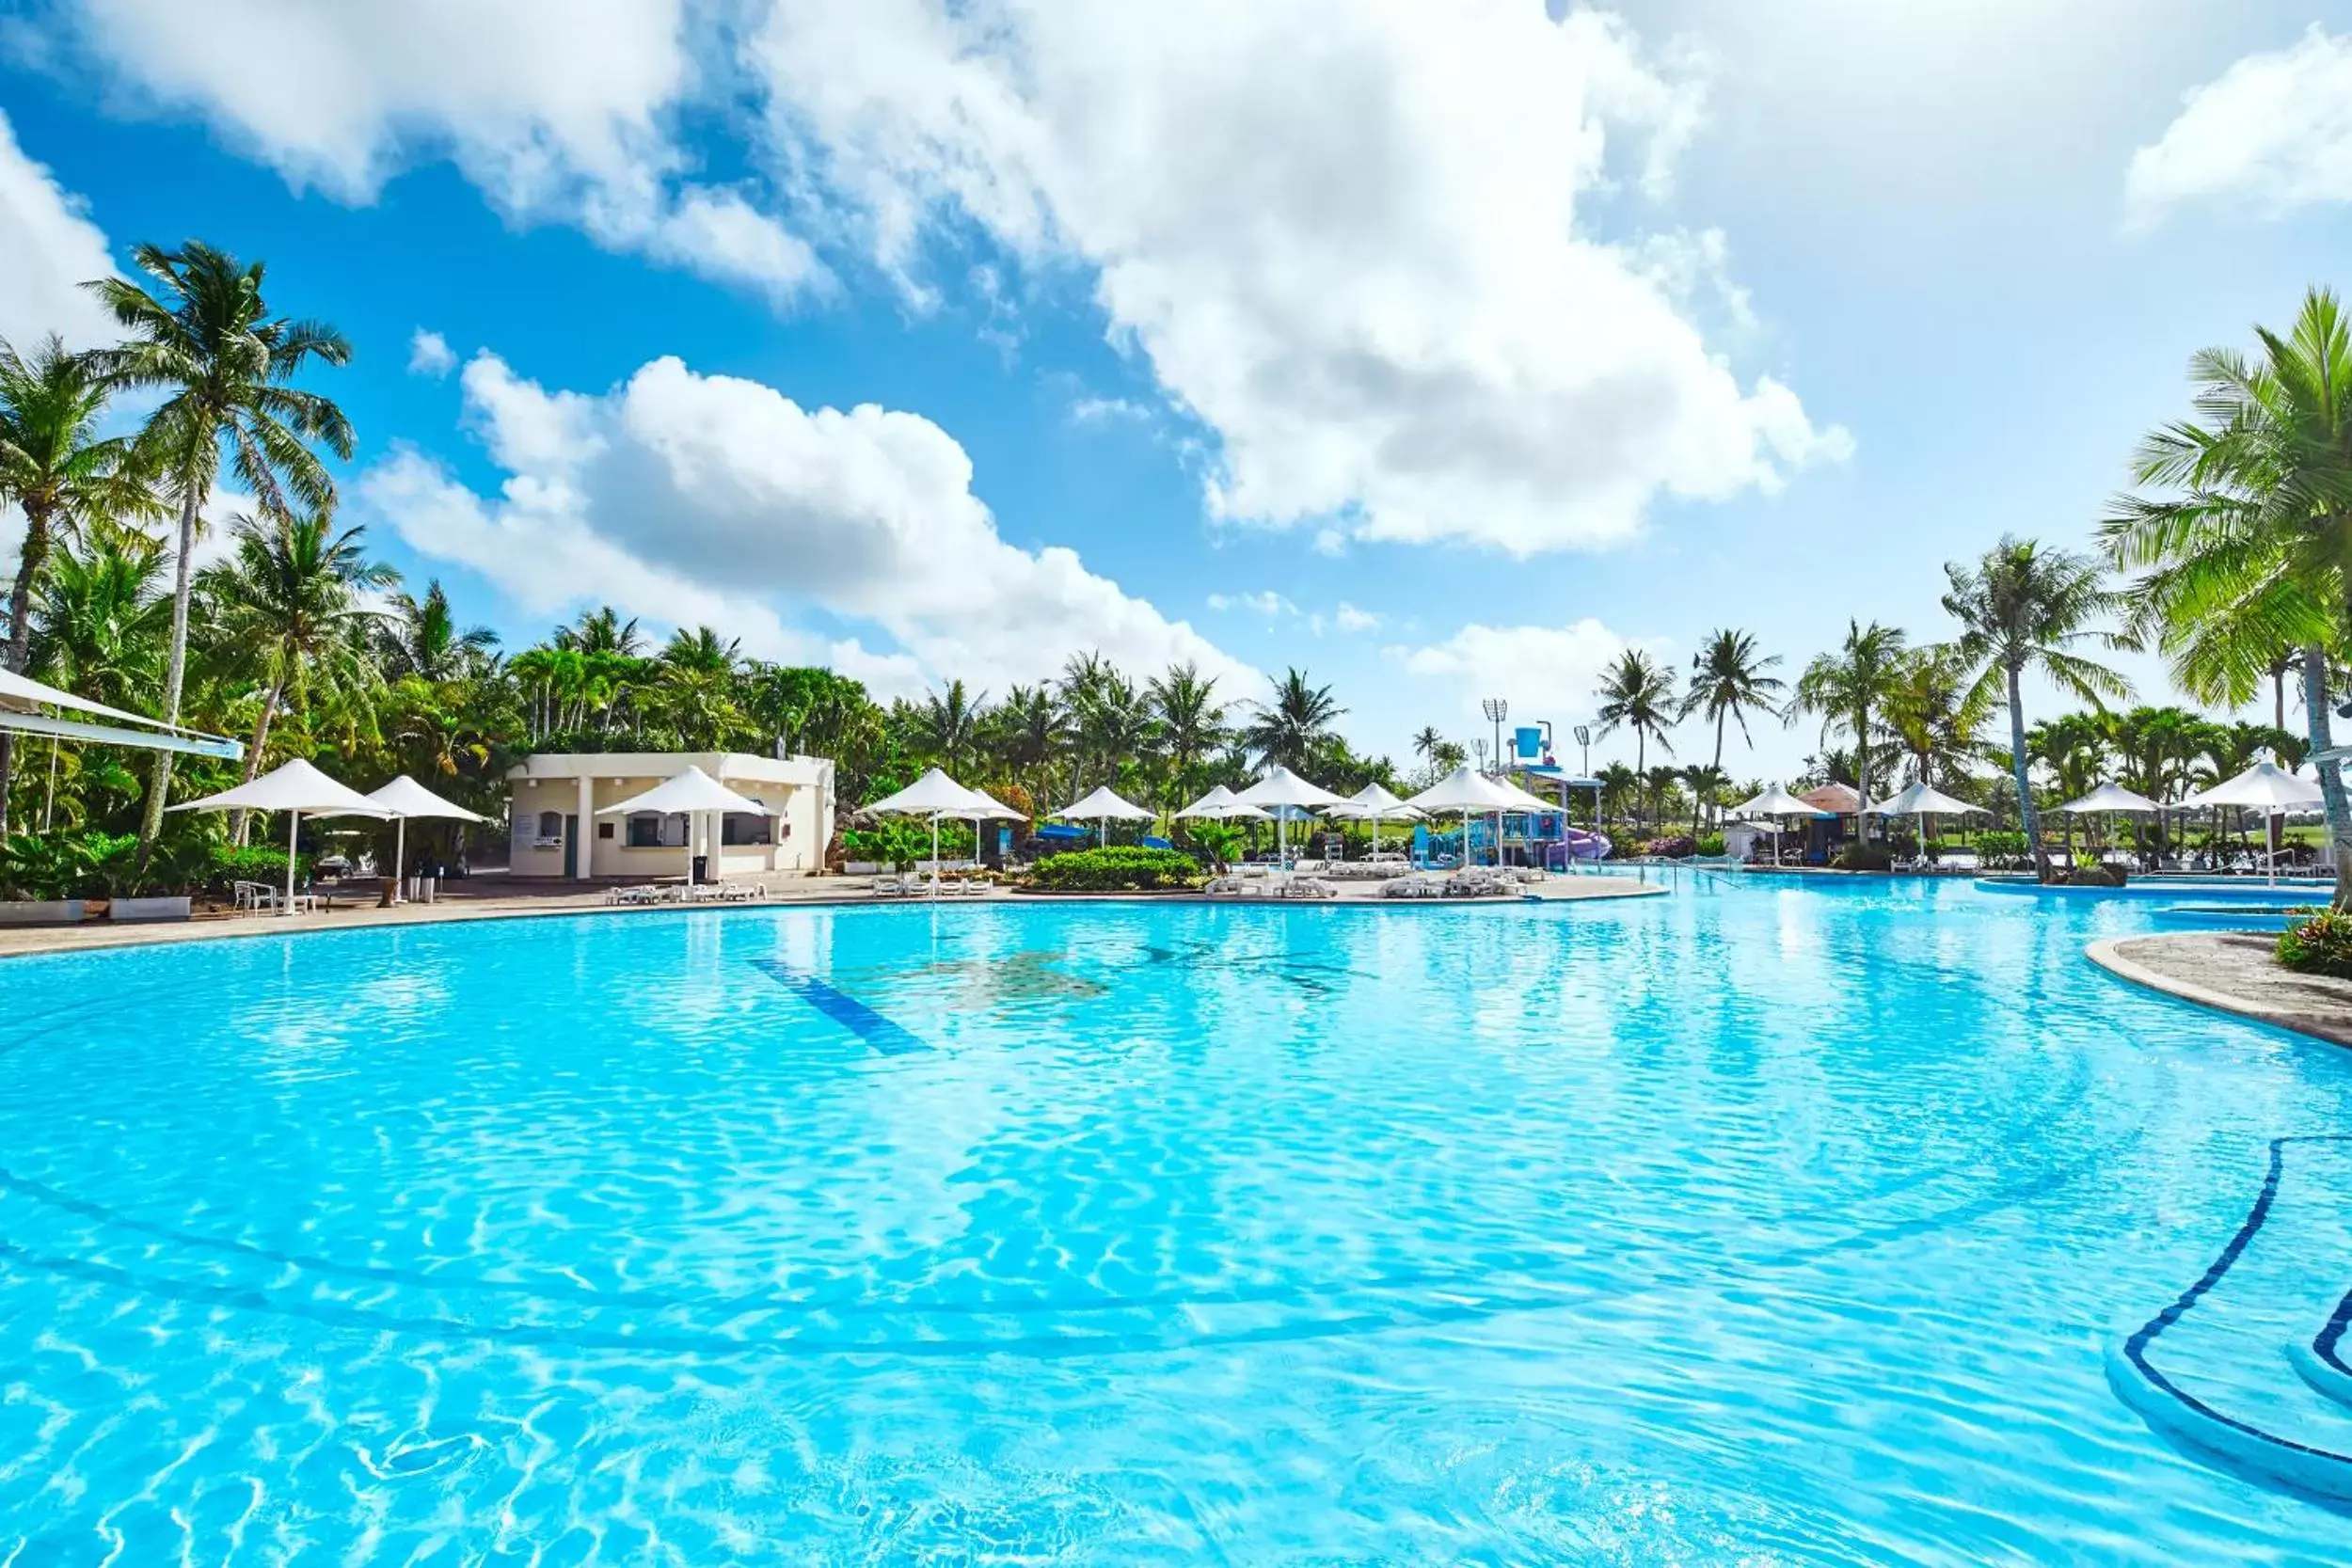 Swimming Pool in LeoPalace Resort Guam